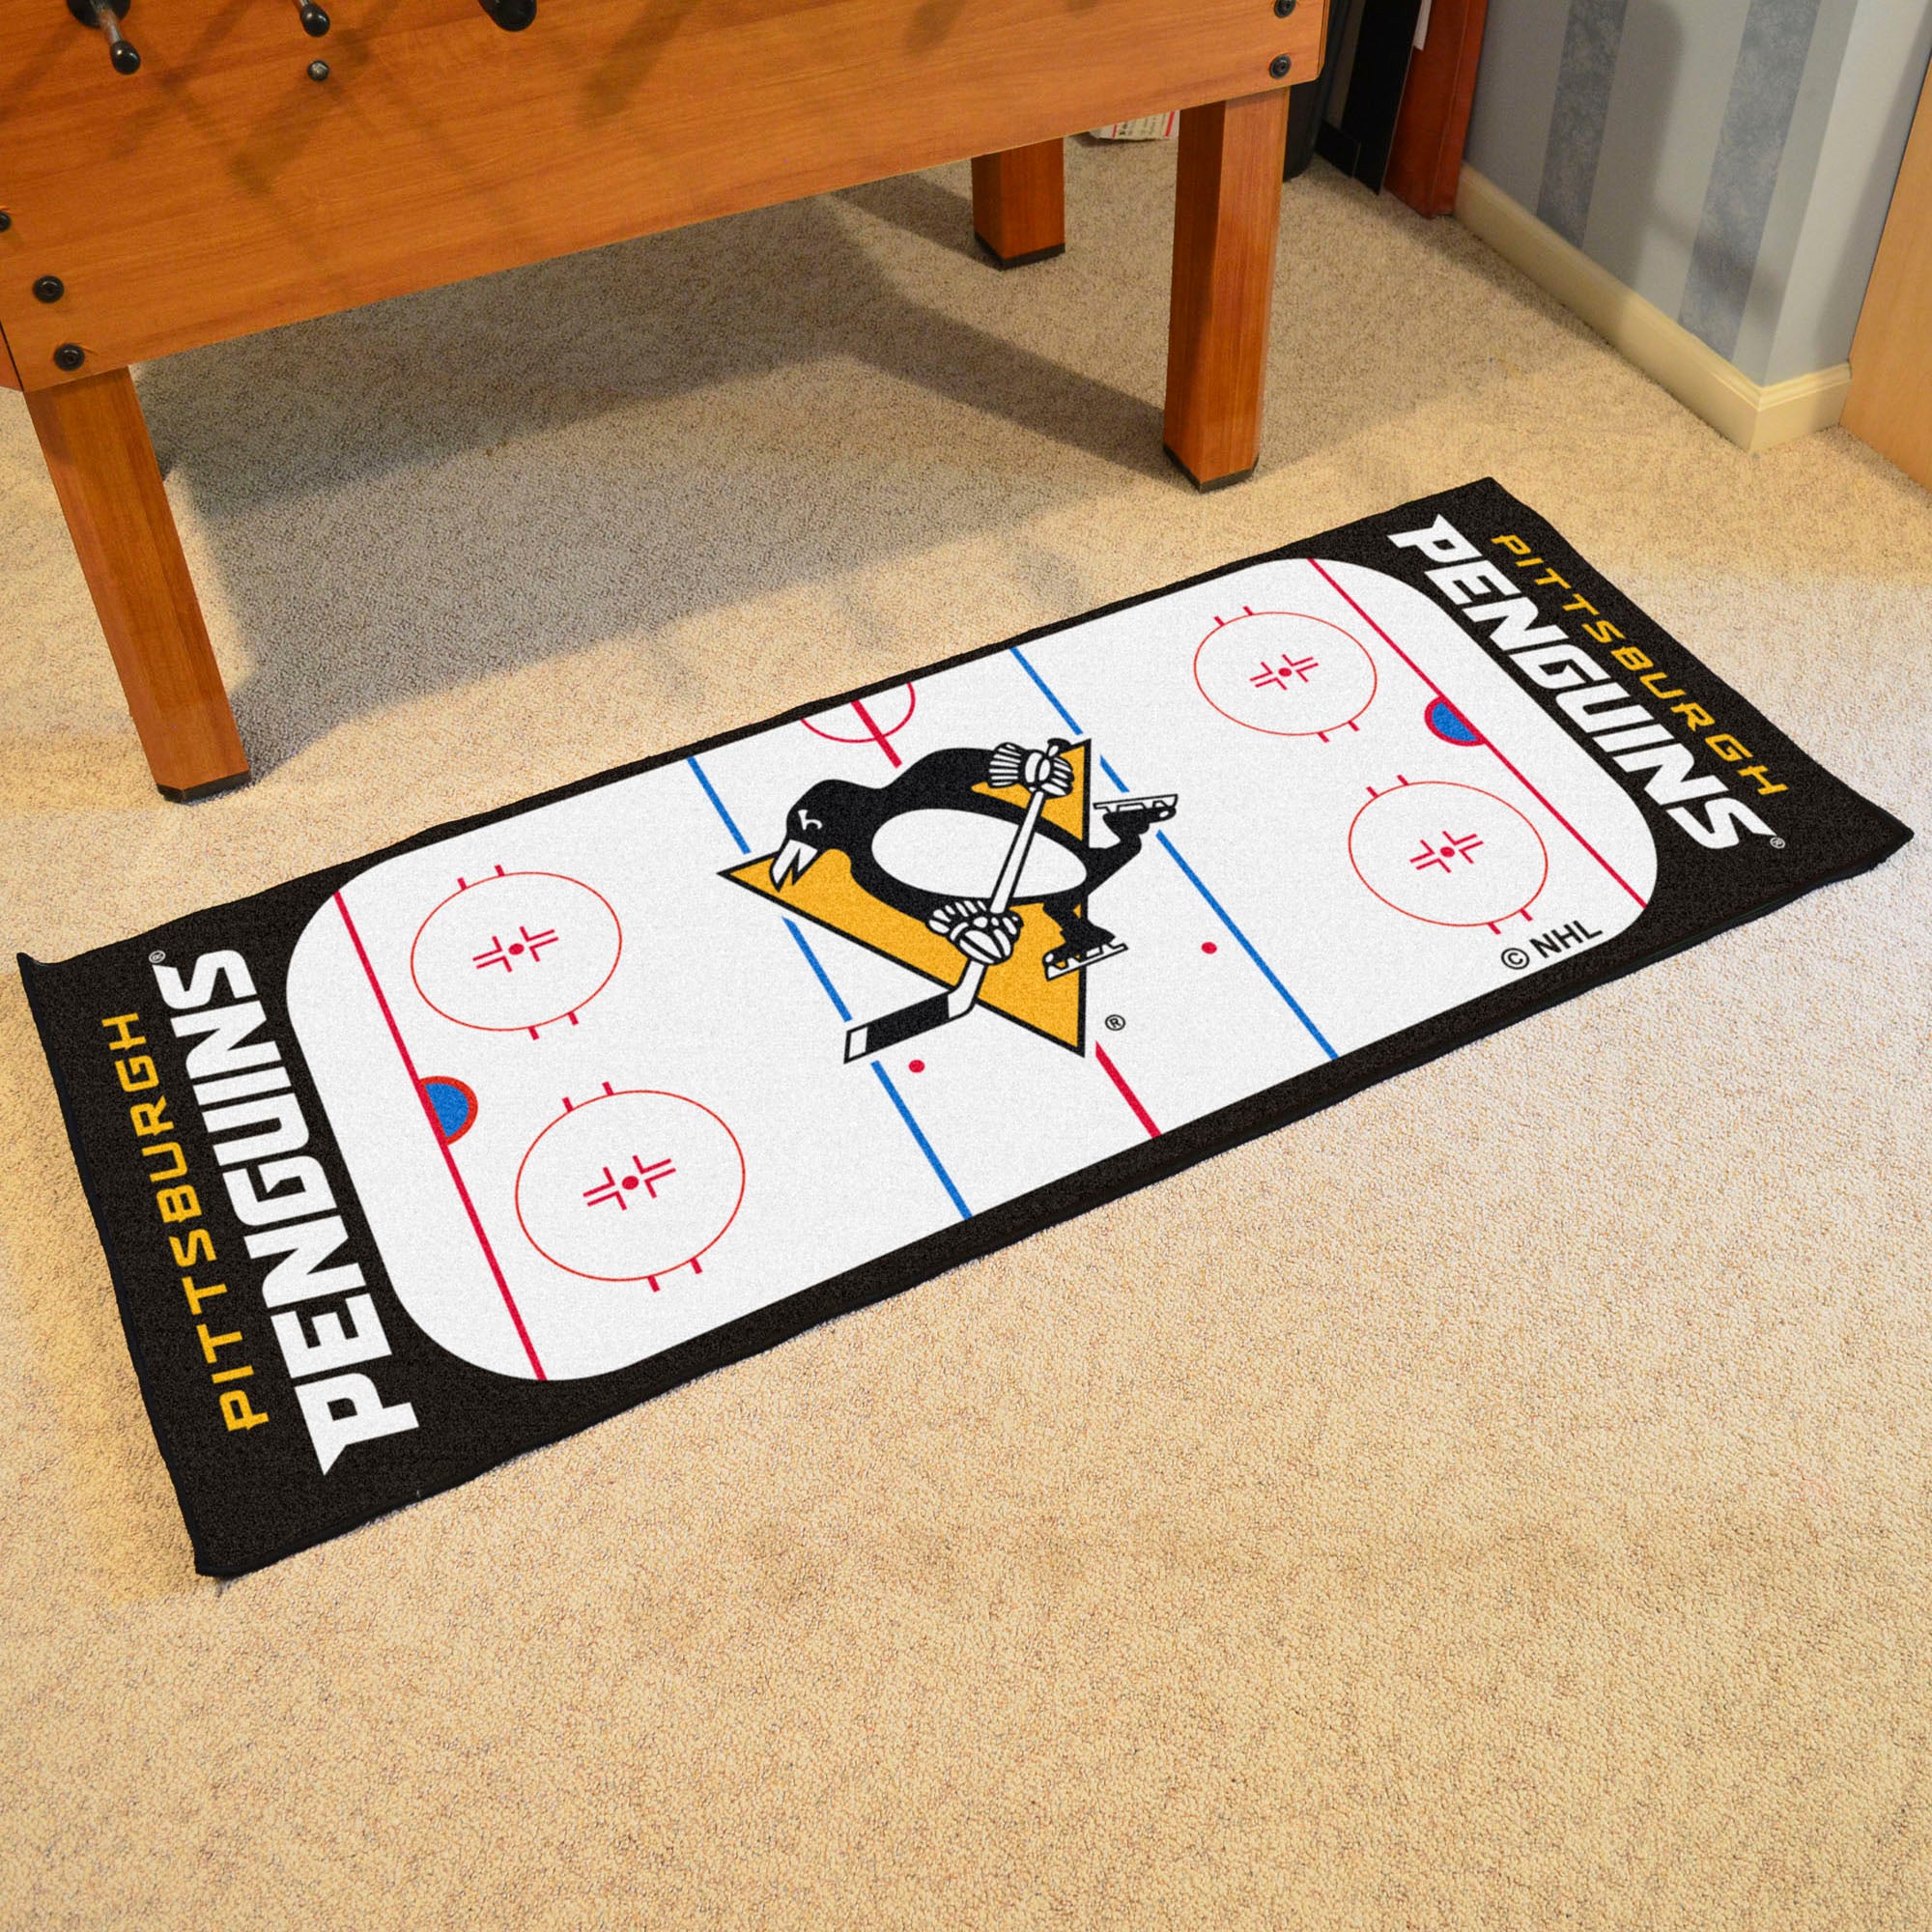 Fanmats  Pittsburgh Penguins